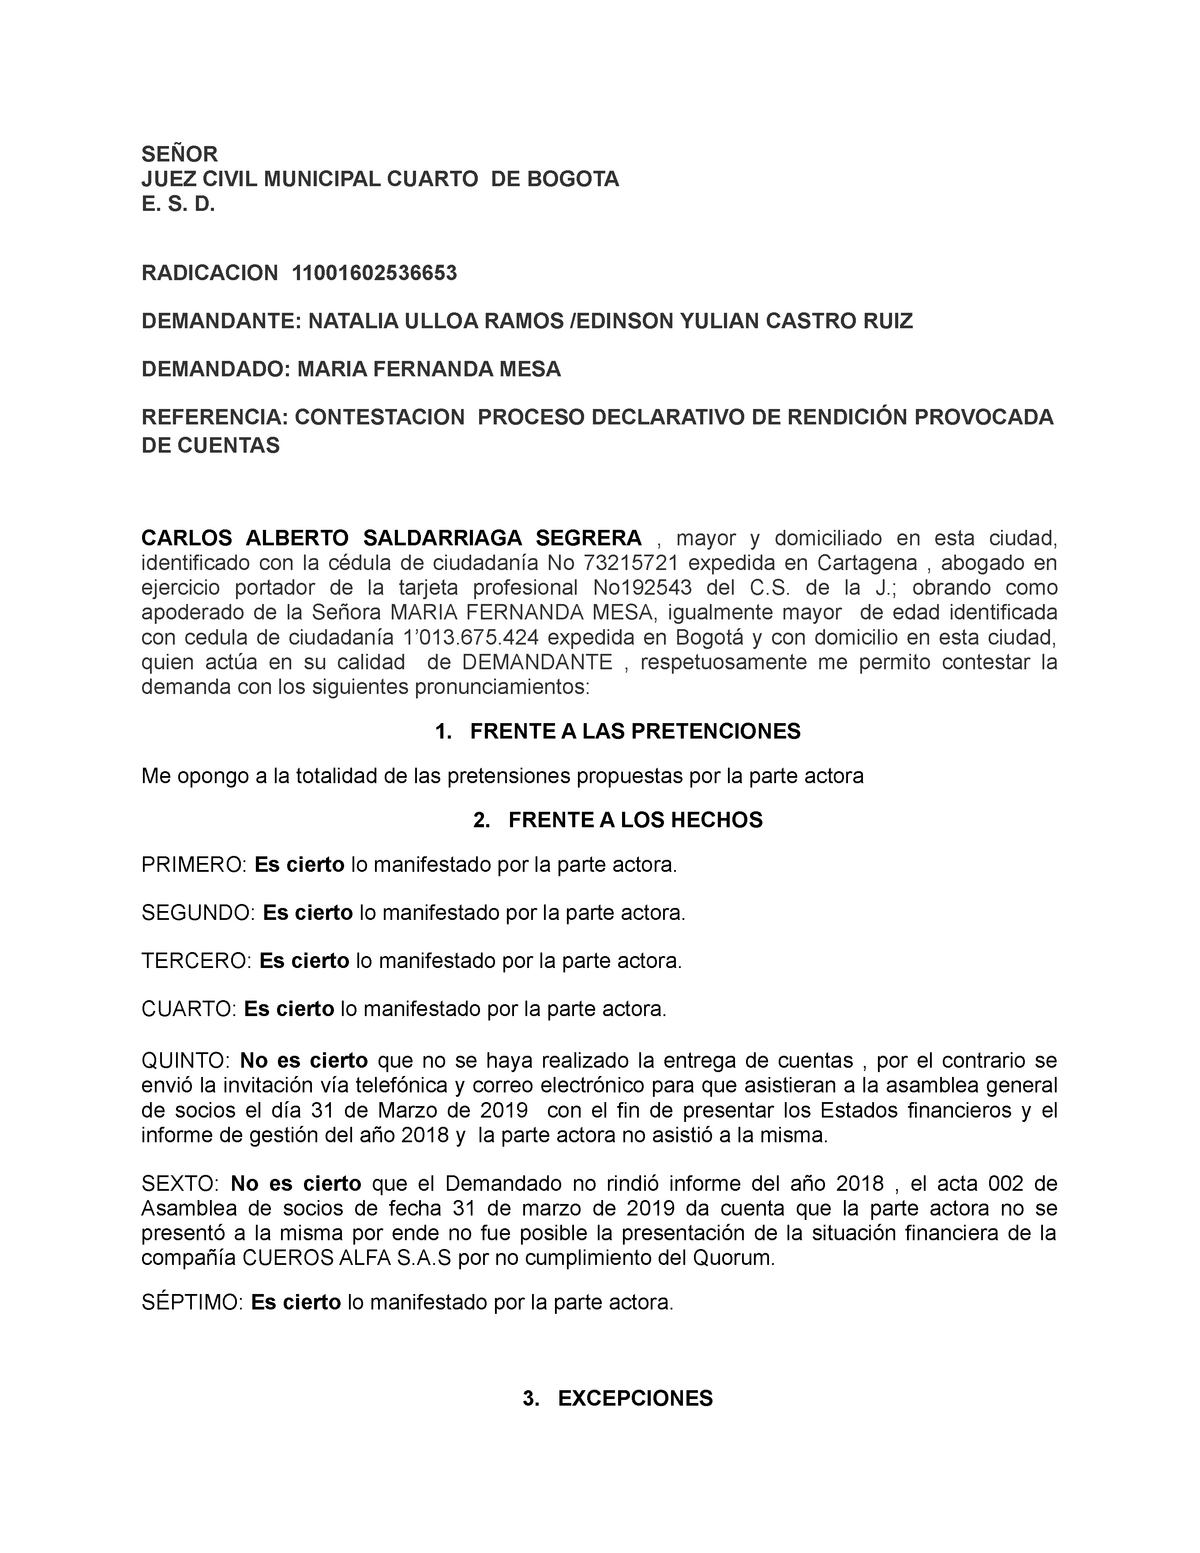 Contestacion de demanda - rendicion provocada - SEÑOR JUEZ CIVIL MUNICIPAL  CUARTO DE BOGOTA E. S. D. - Studocu